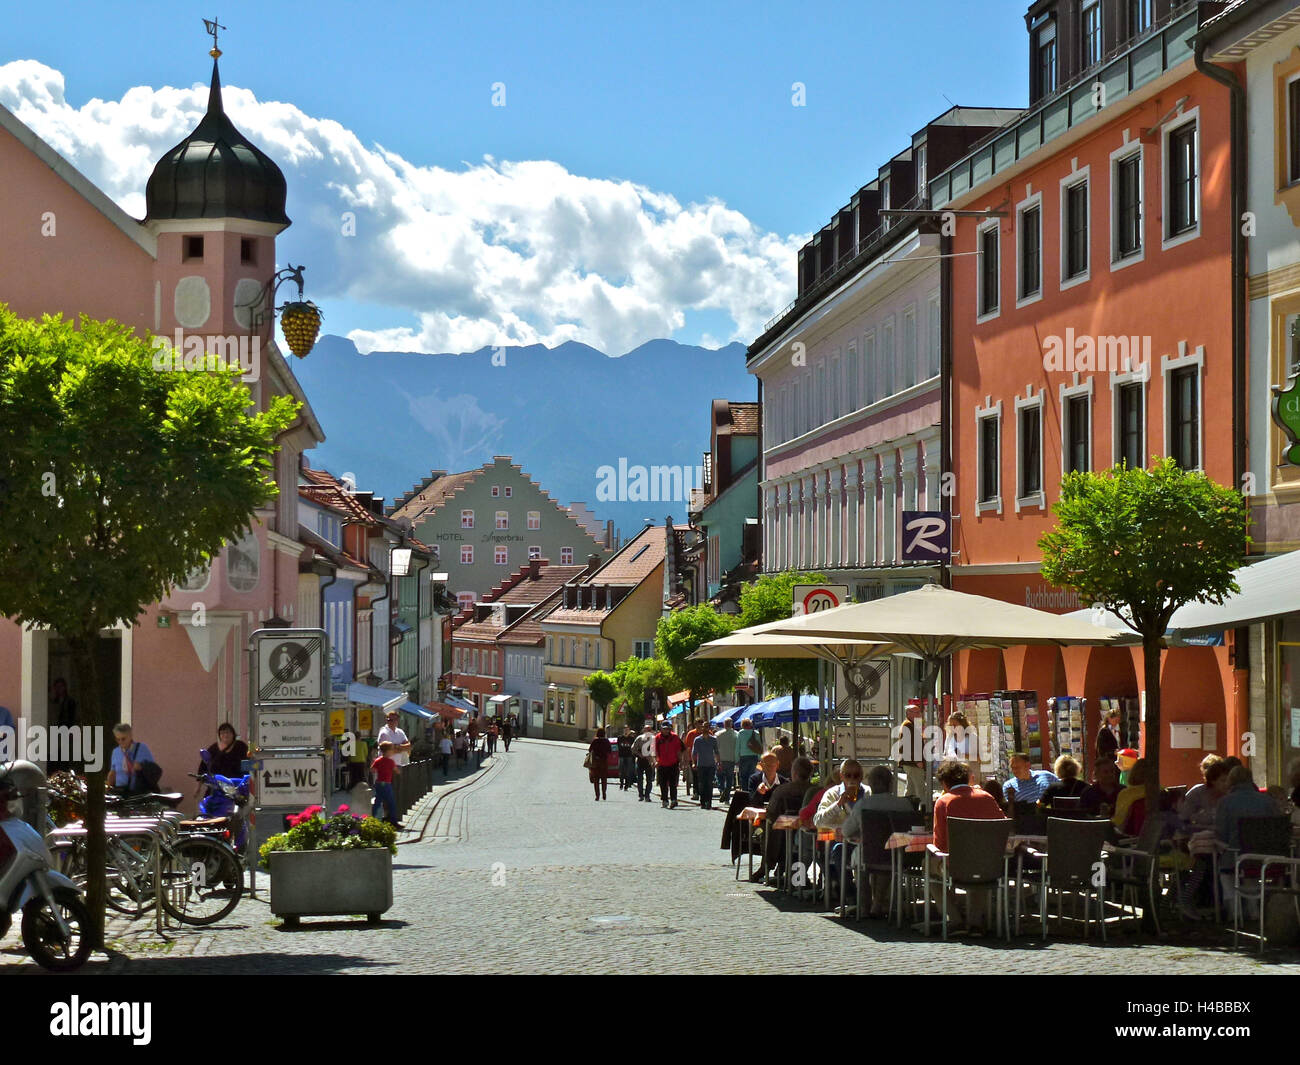 Alemania, la Alta Baviera, Murnau Foto de stock